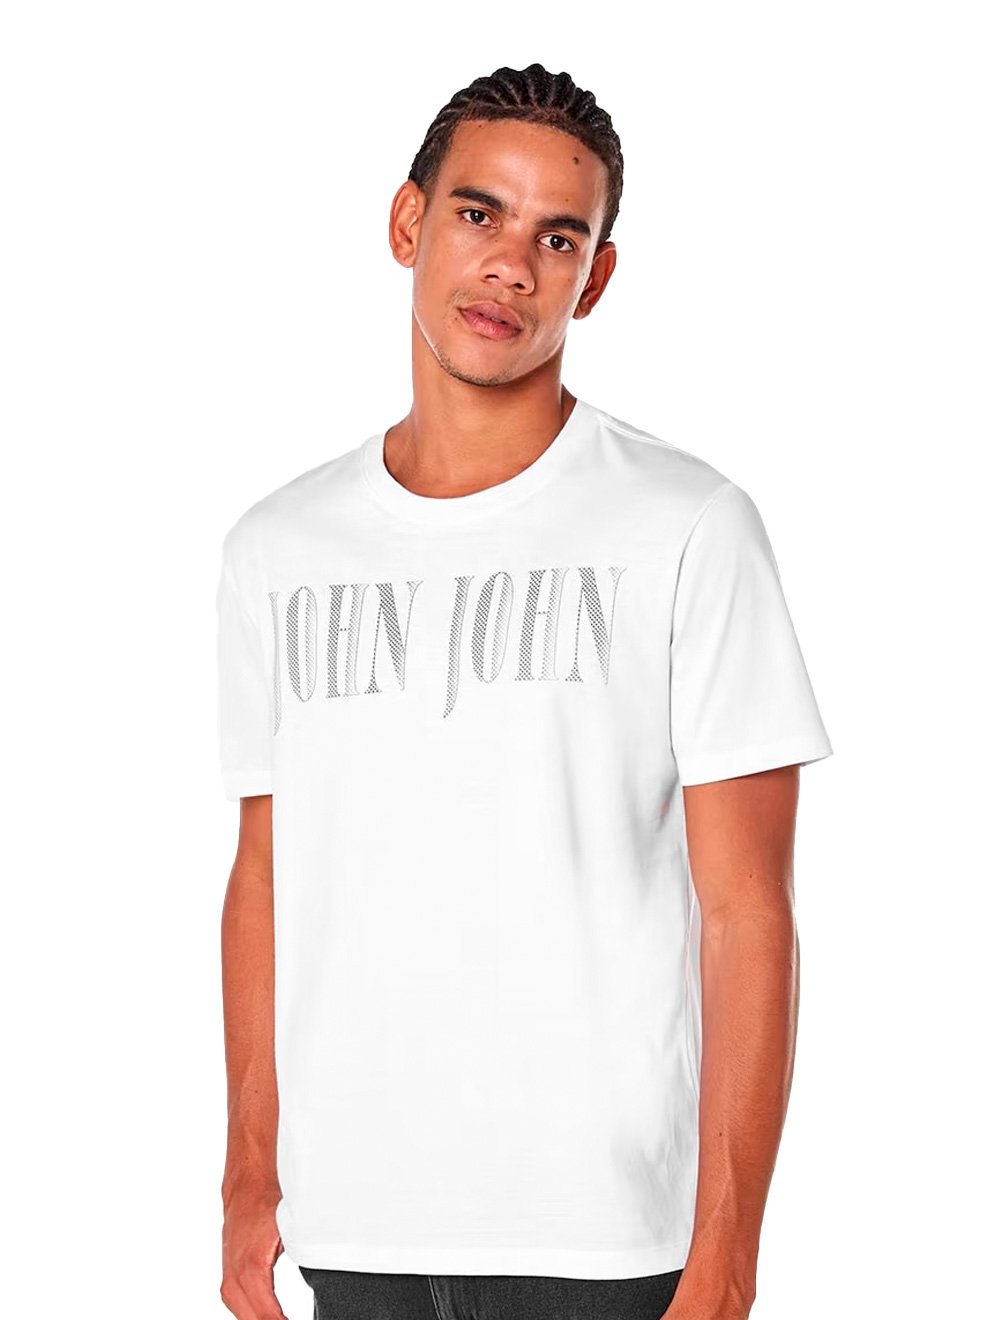 Camiseta John John Logo Branca Masculina - Branco